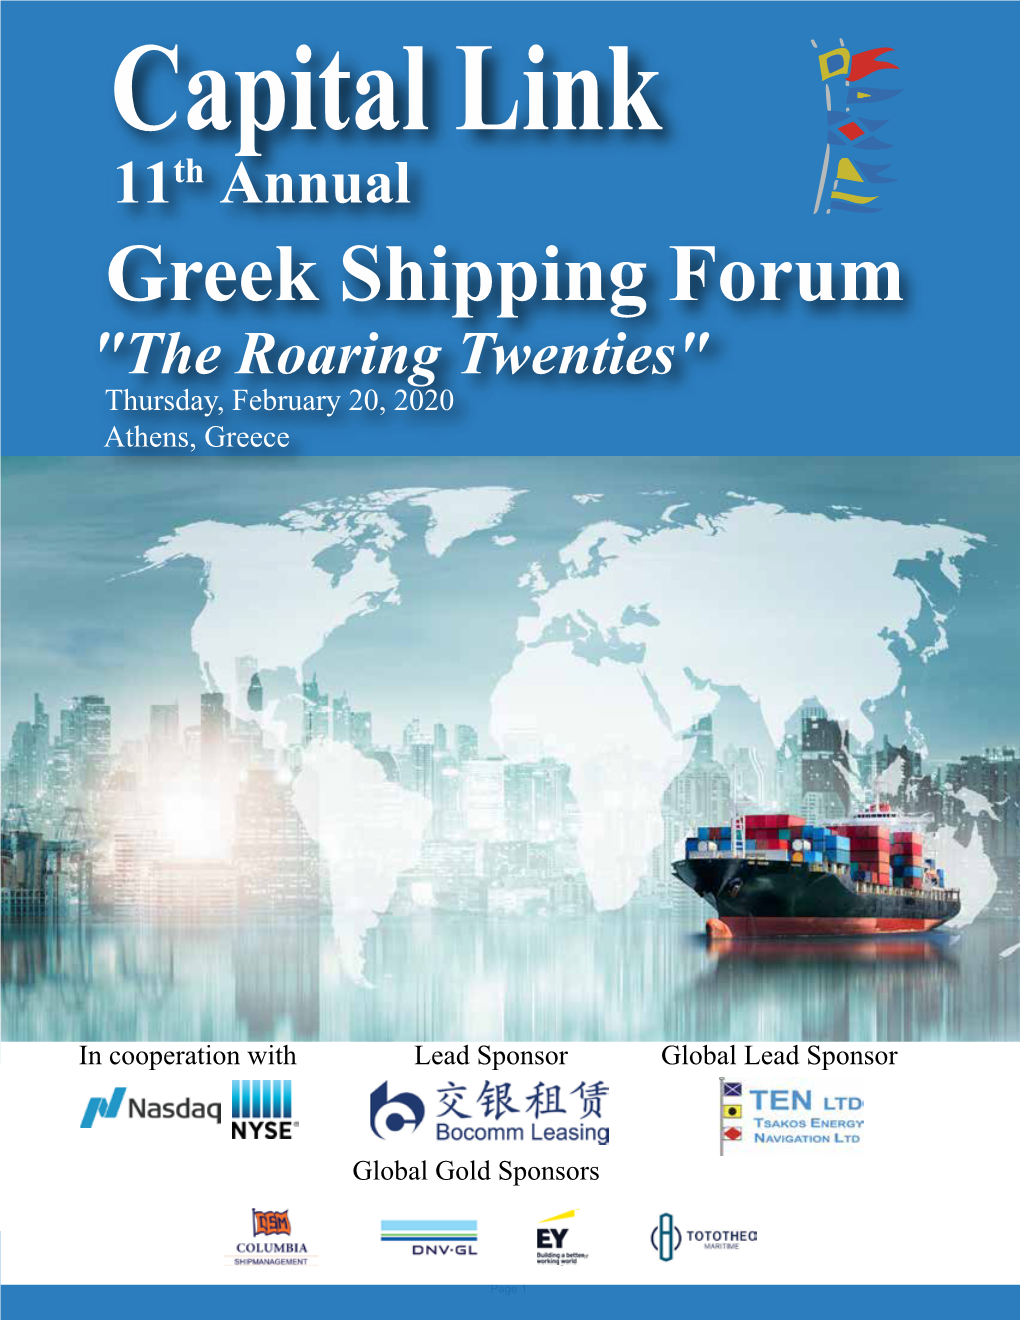 Greek Shipping Forum "The Roaring Twenties" Thursday, February 20, 2020 Athens, Greece